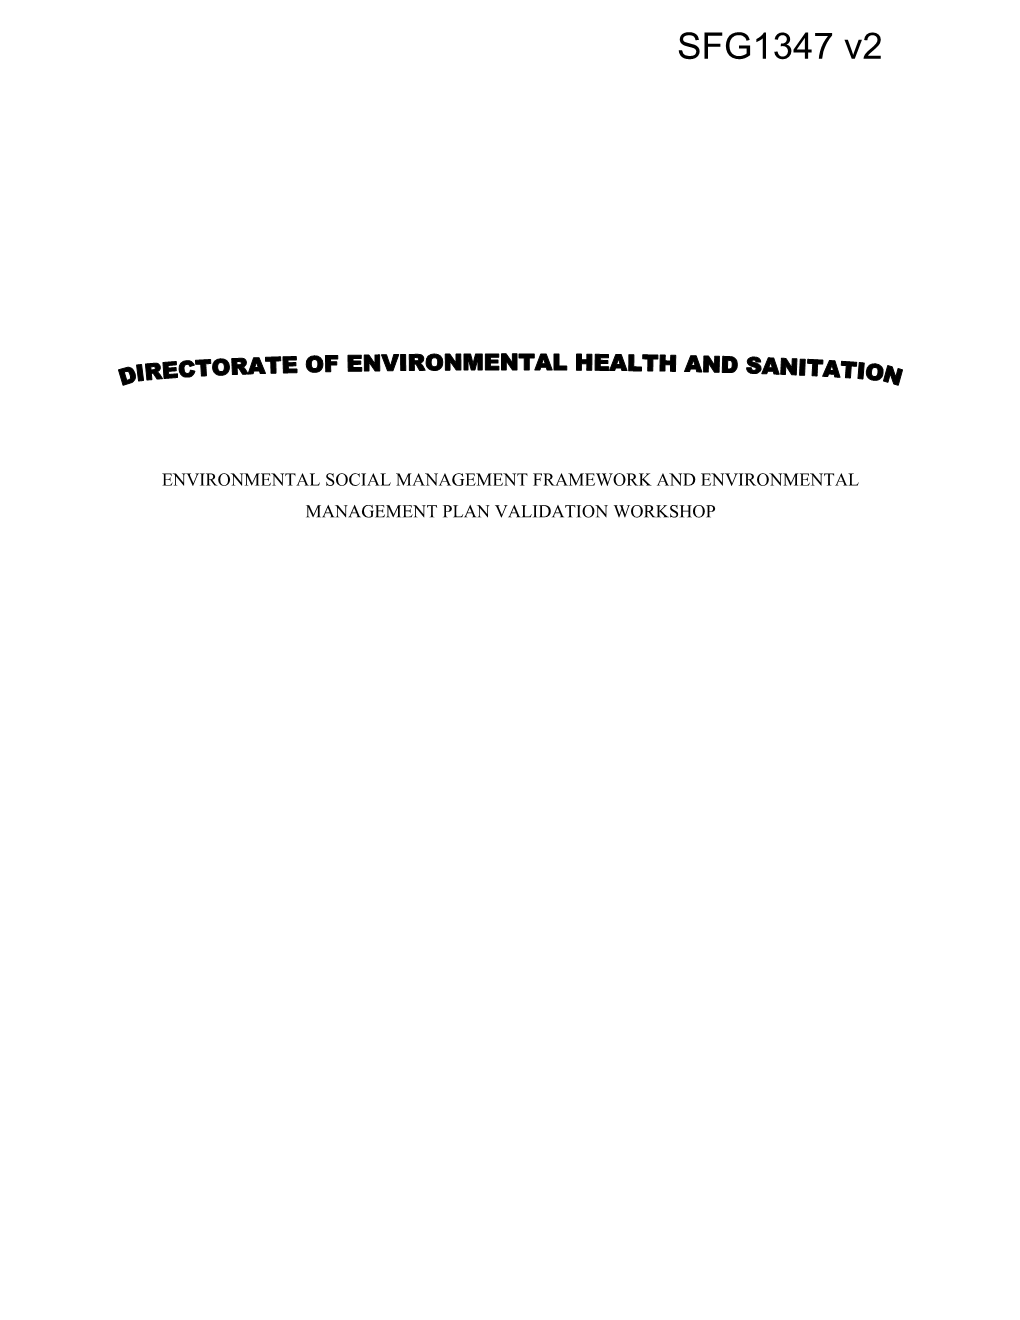 Environmental Social Management Framework and Environmental Management Plan Validation Workshop